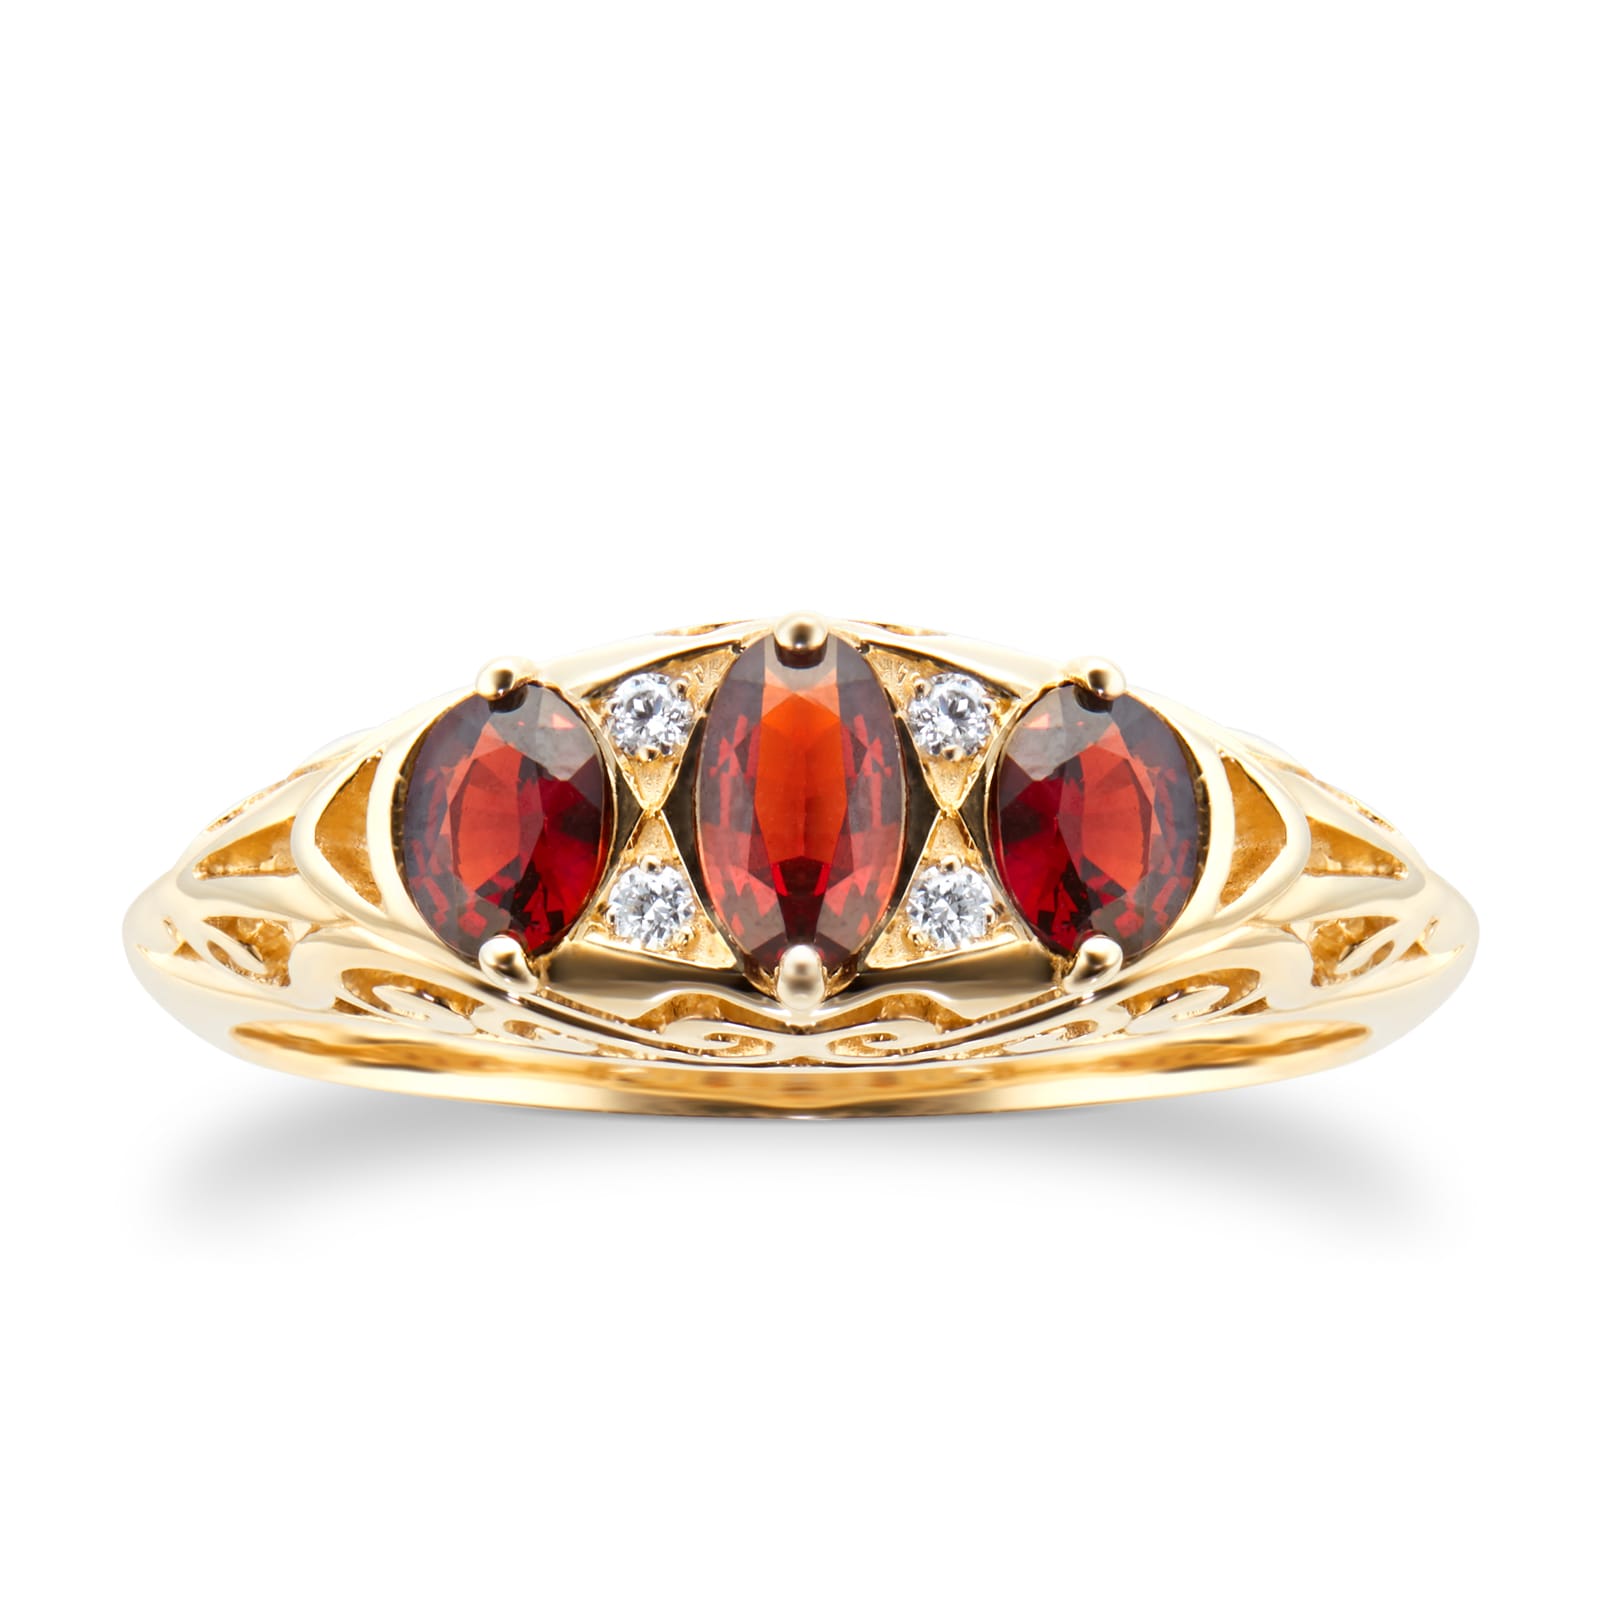 9ct Yellow Gold Victorian Style 3 Stone Garnet & Diamond Ring - Ring Size J.5